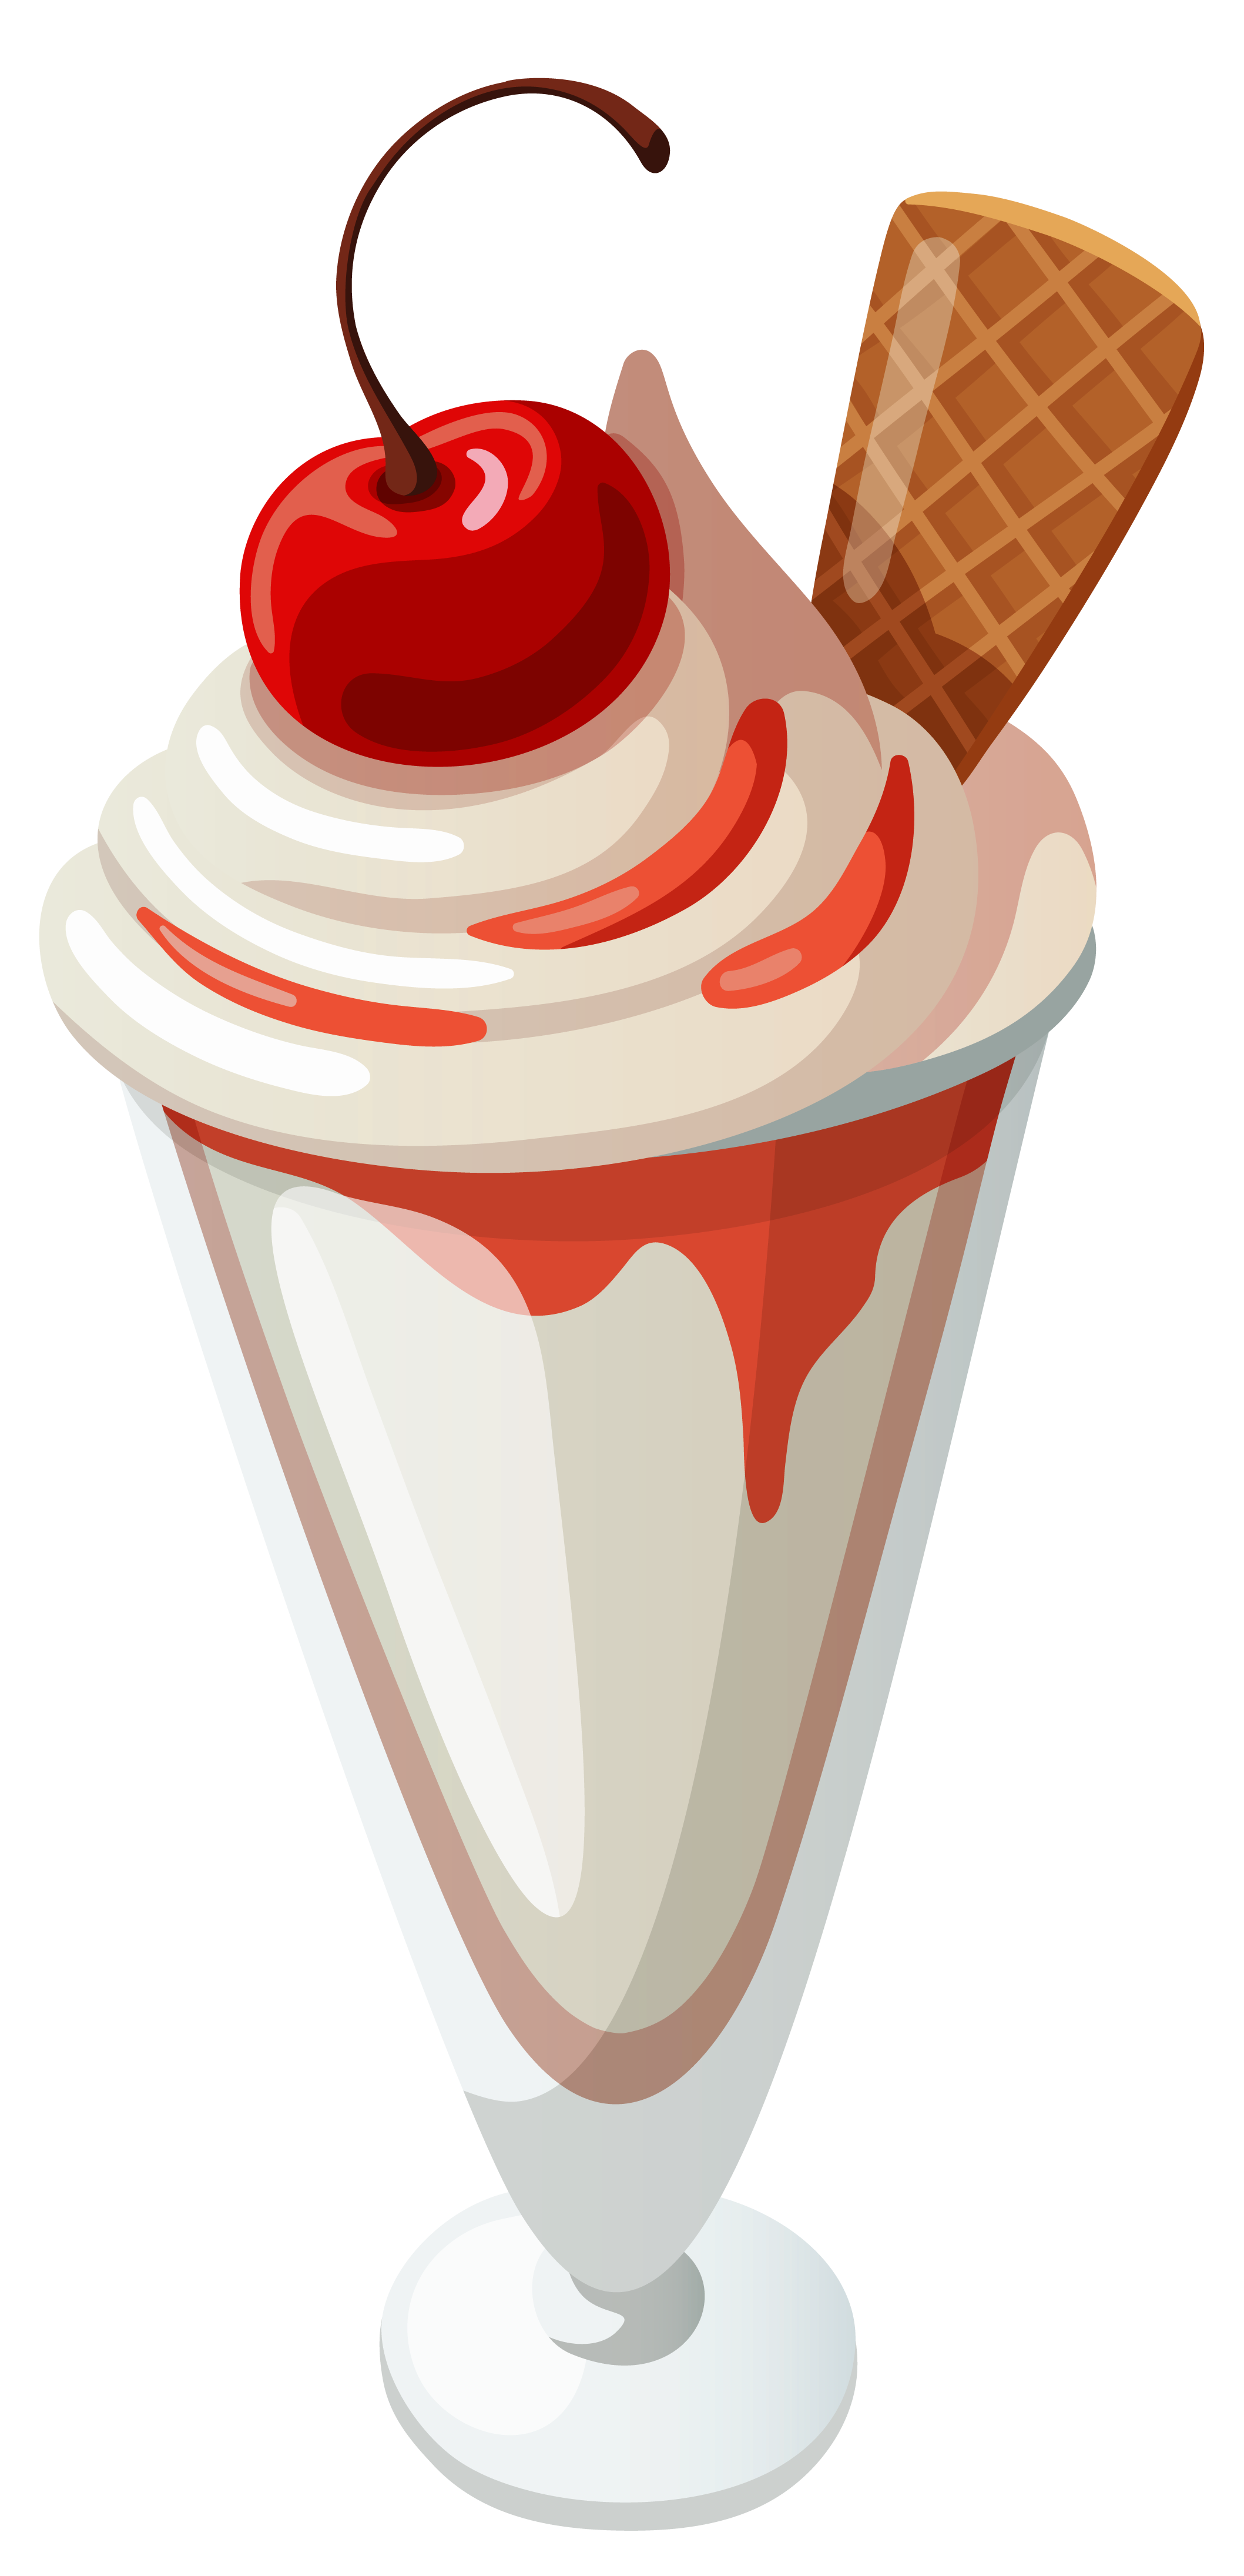 Ice cream sundae clipart 6 - Ice Cream Sundae Clipart